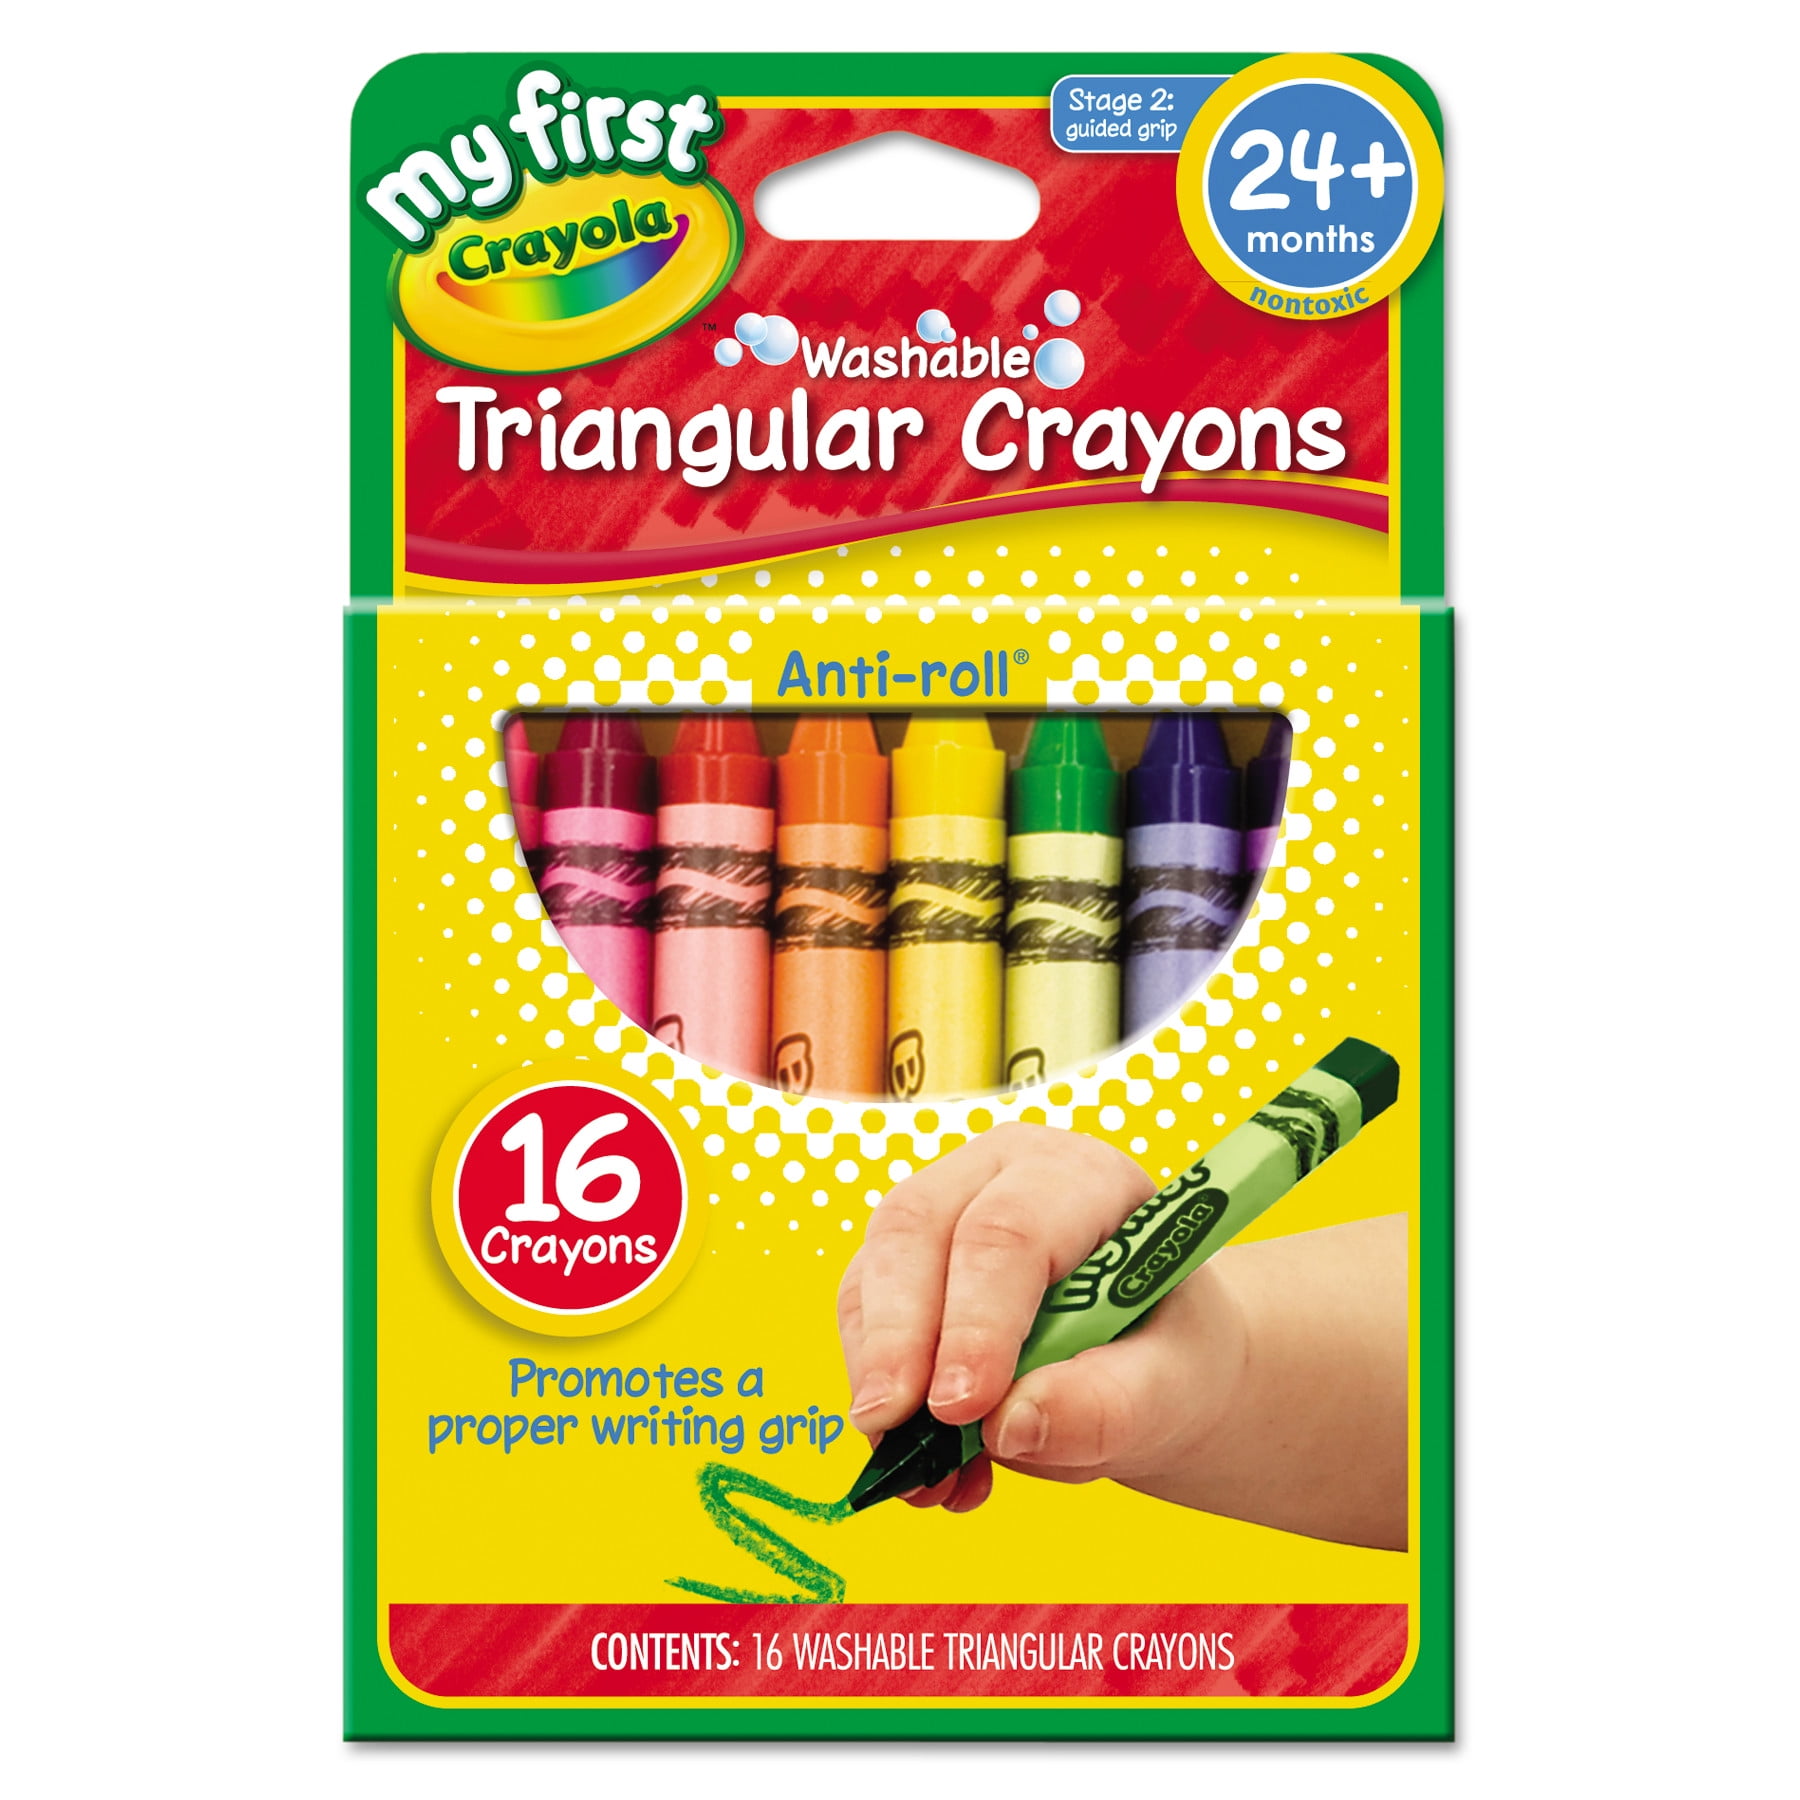 My First Crayola™ Washable Tripod Grip Crayons